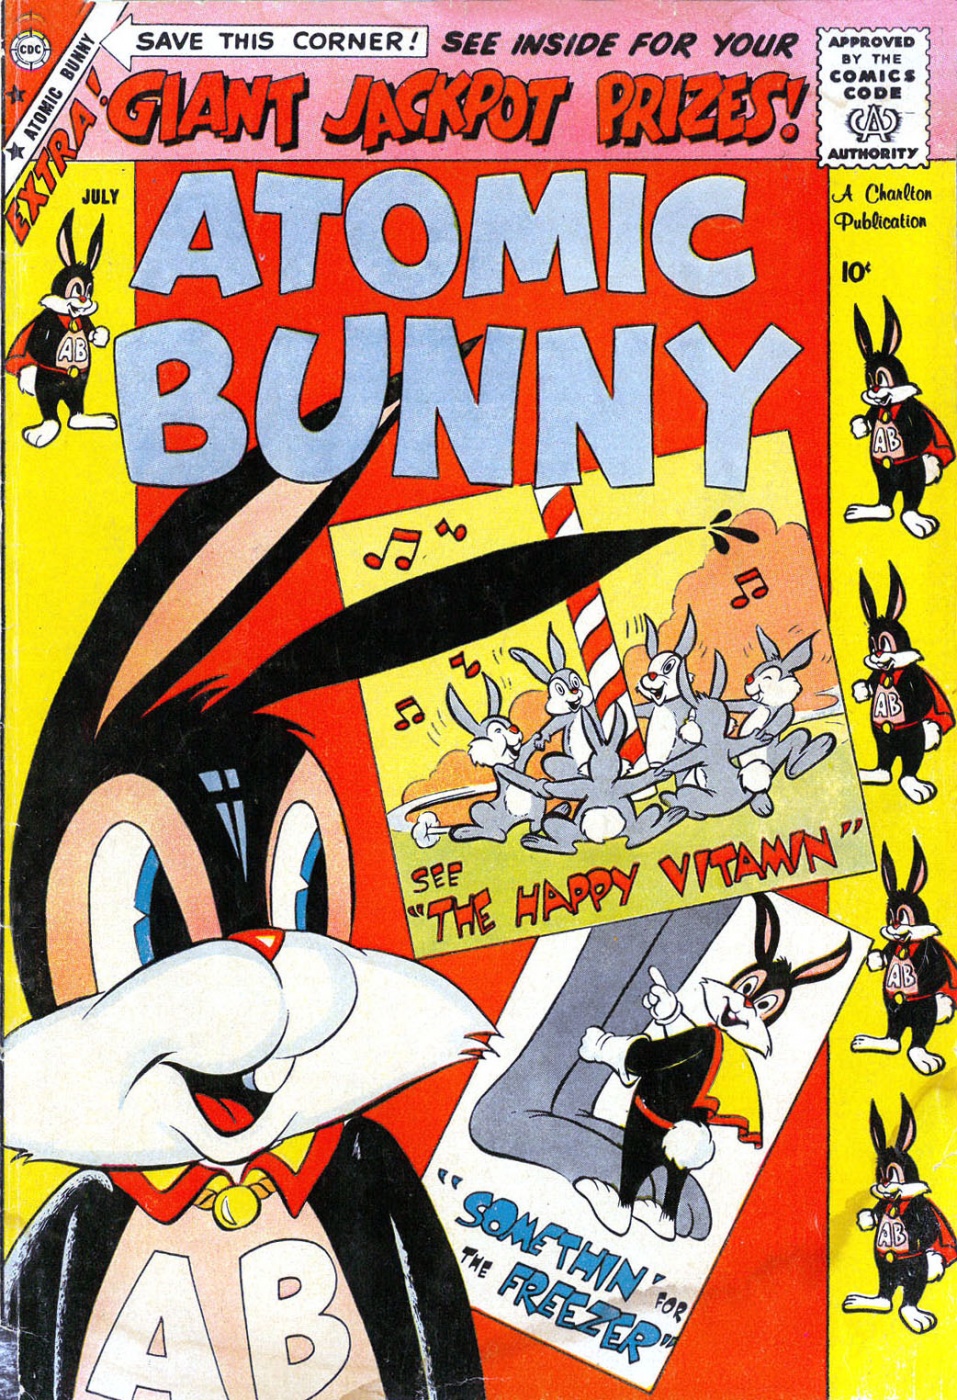 Comic Strips: Atomic Bunny #3